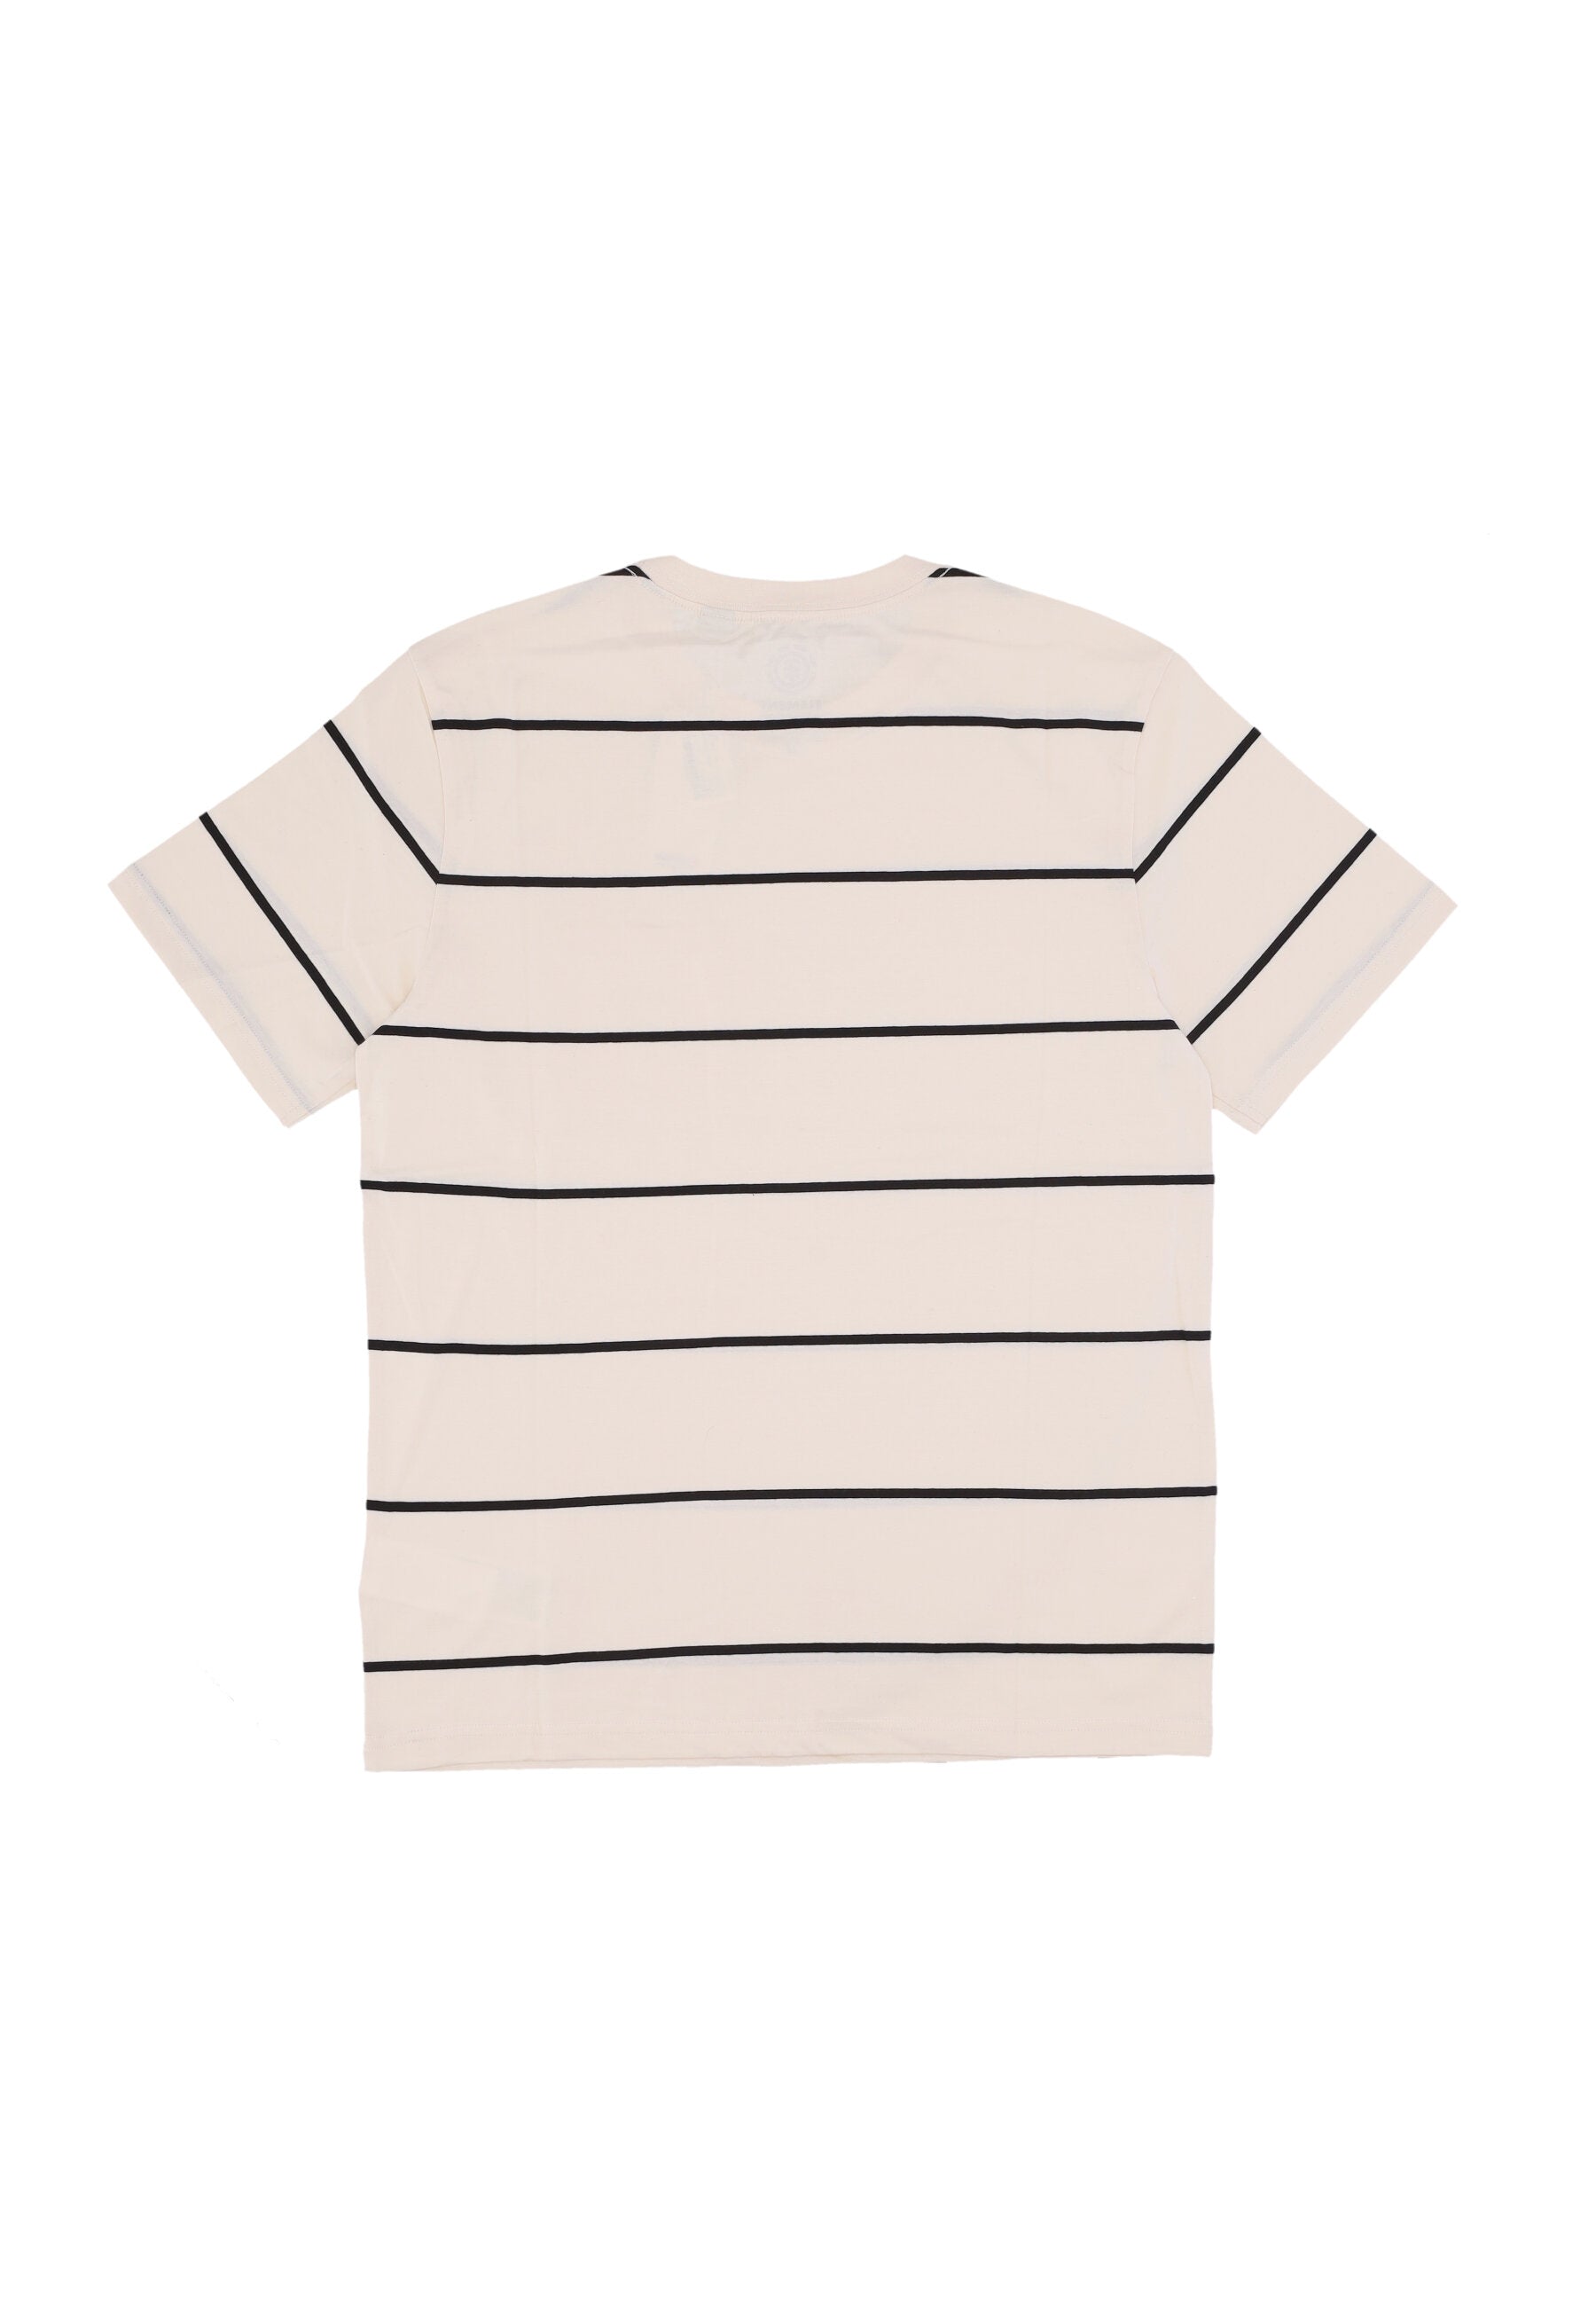 Maglietta Uomo Basic Pocket Label Tee White/black Stripes ELYKT00116